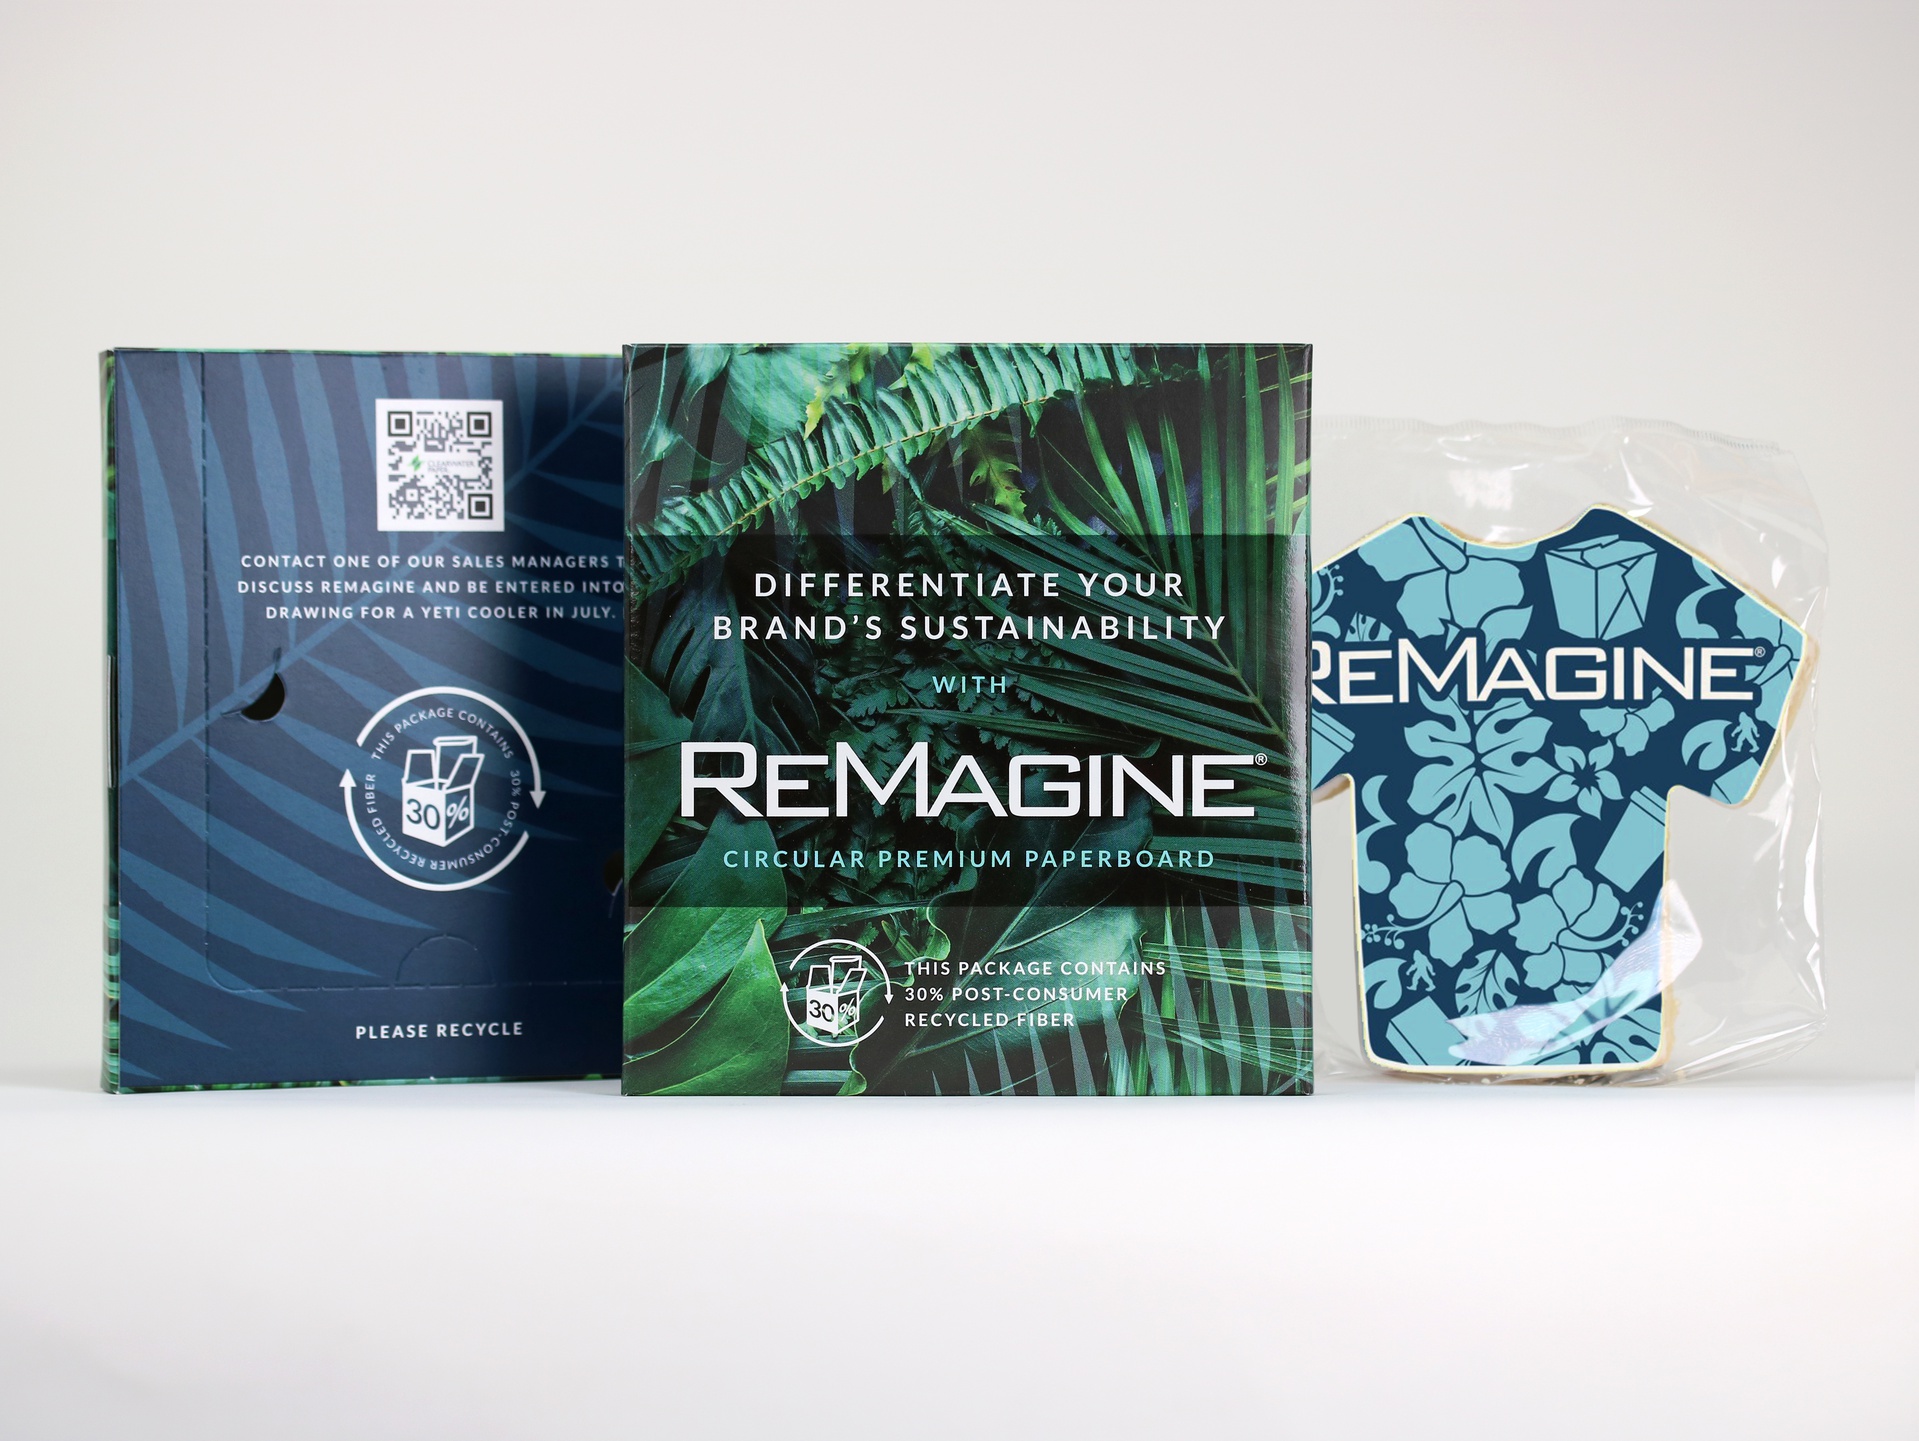 ReMagine 30% PCR paperboard promotional packaging